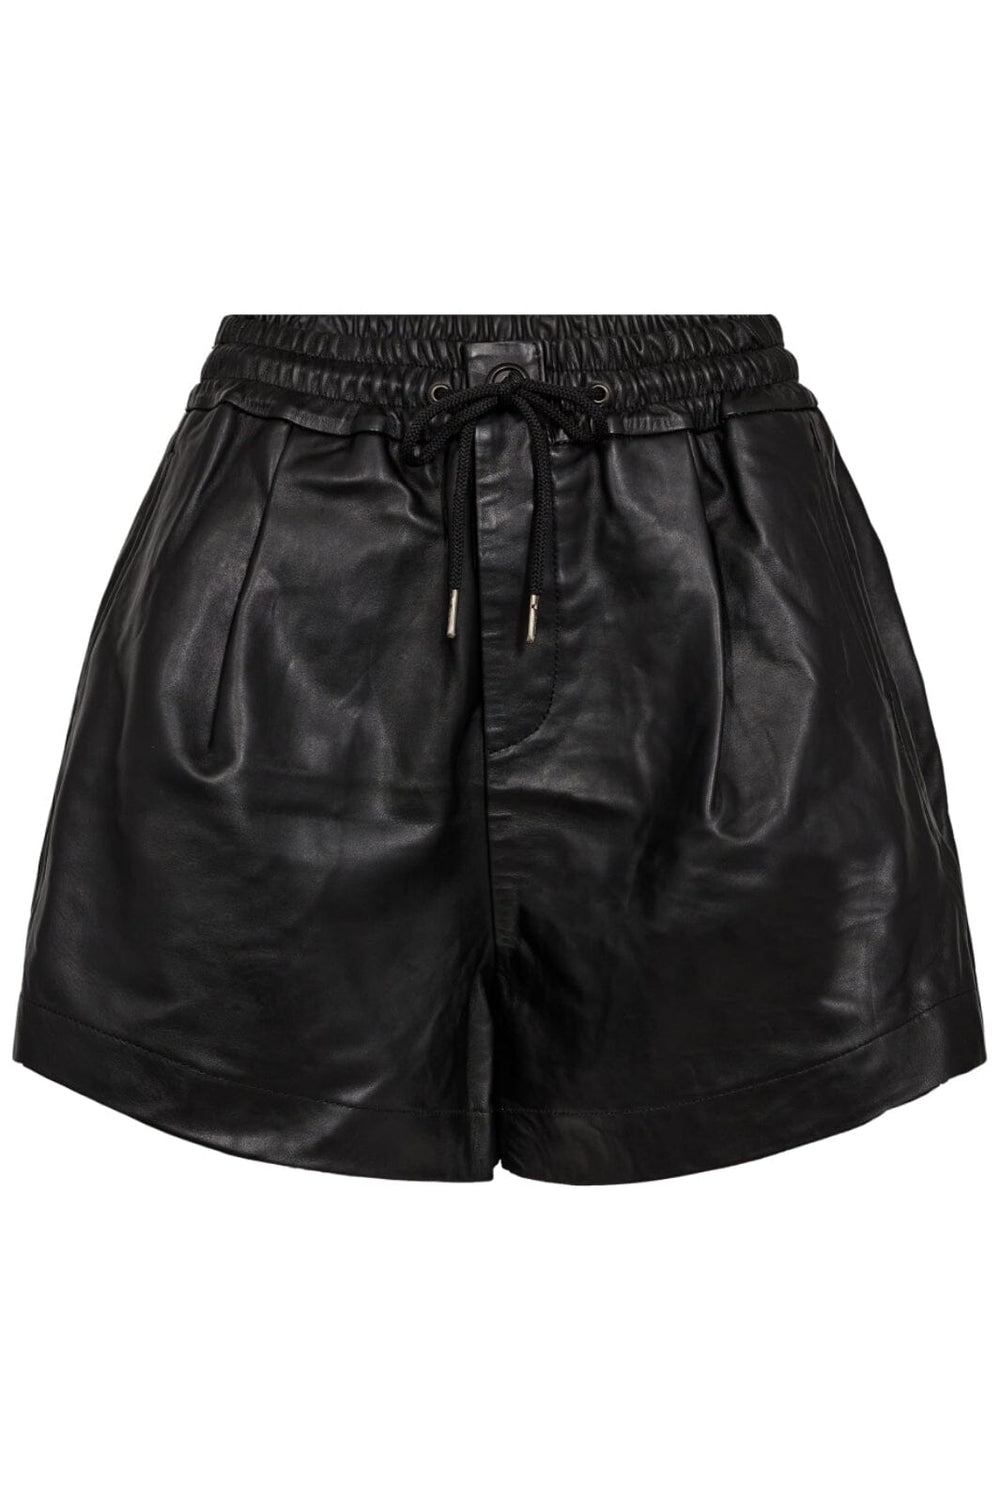 Forudbestilling - Co´couture - New Phoebecc Leather Shorts 31259 - 96 Black Shorts 